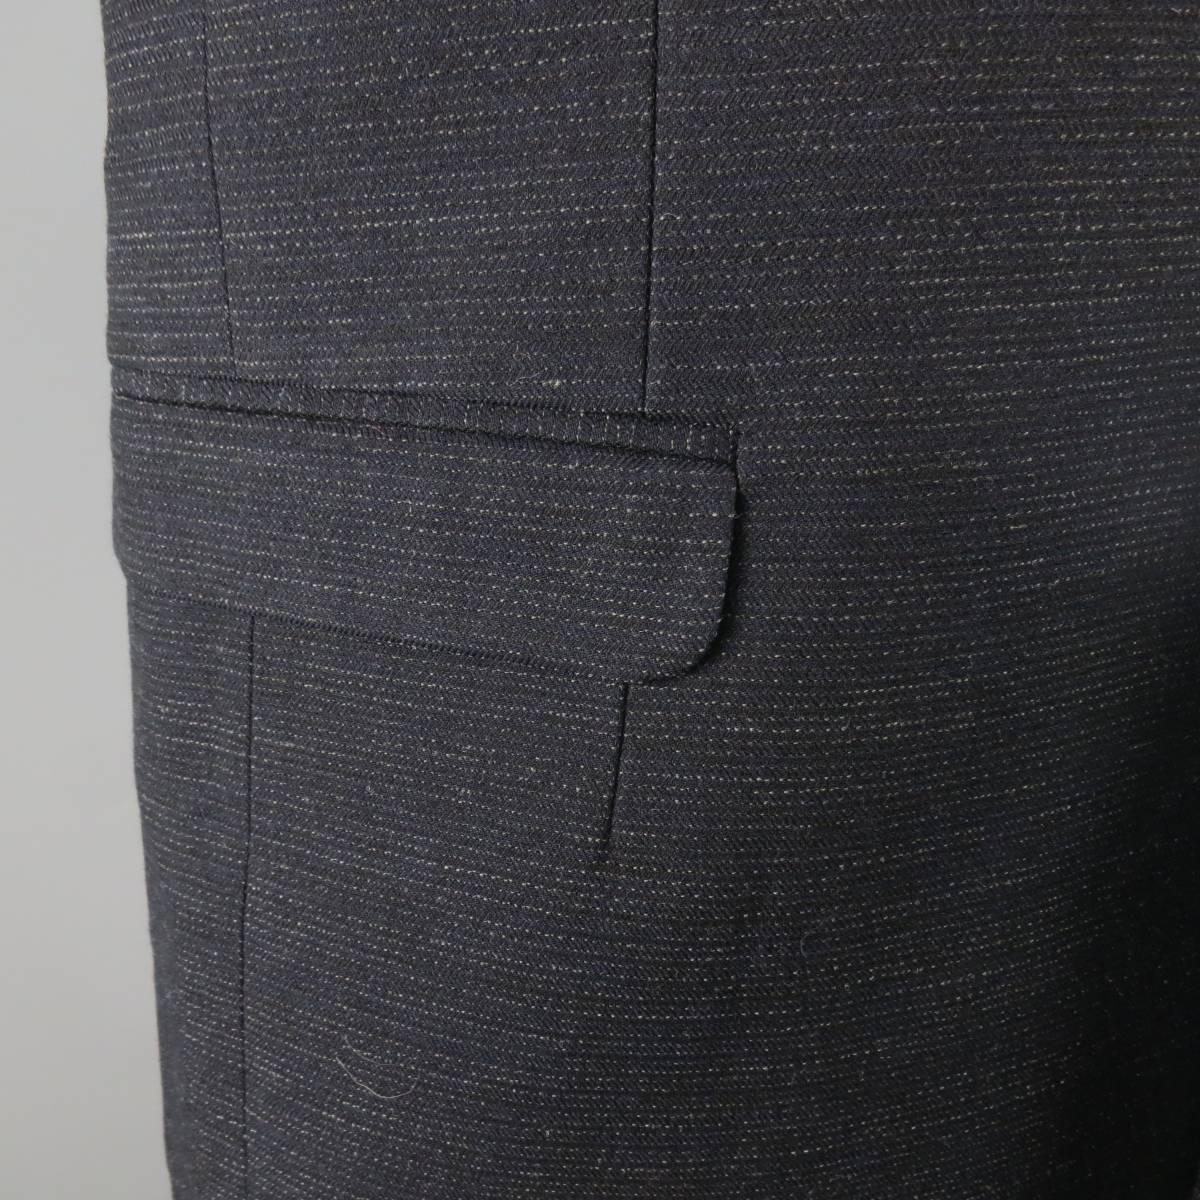 Black Men's MARNI Vest - 38 Navy Textured Wool Blend Notch Lapel Sport Coat